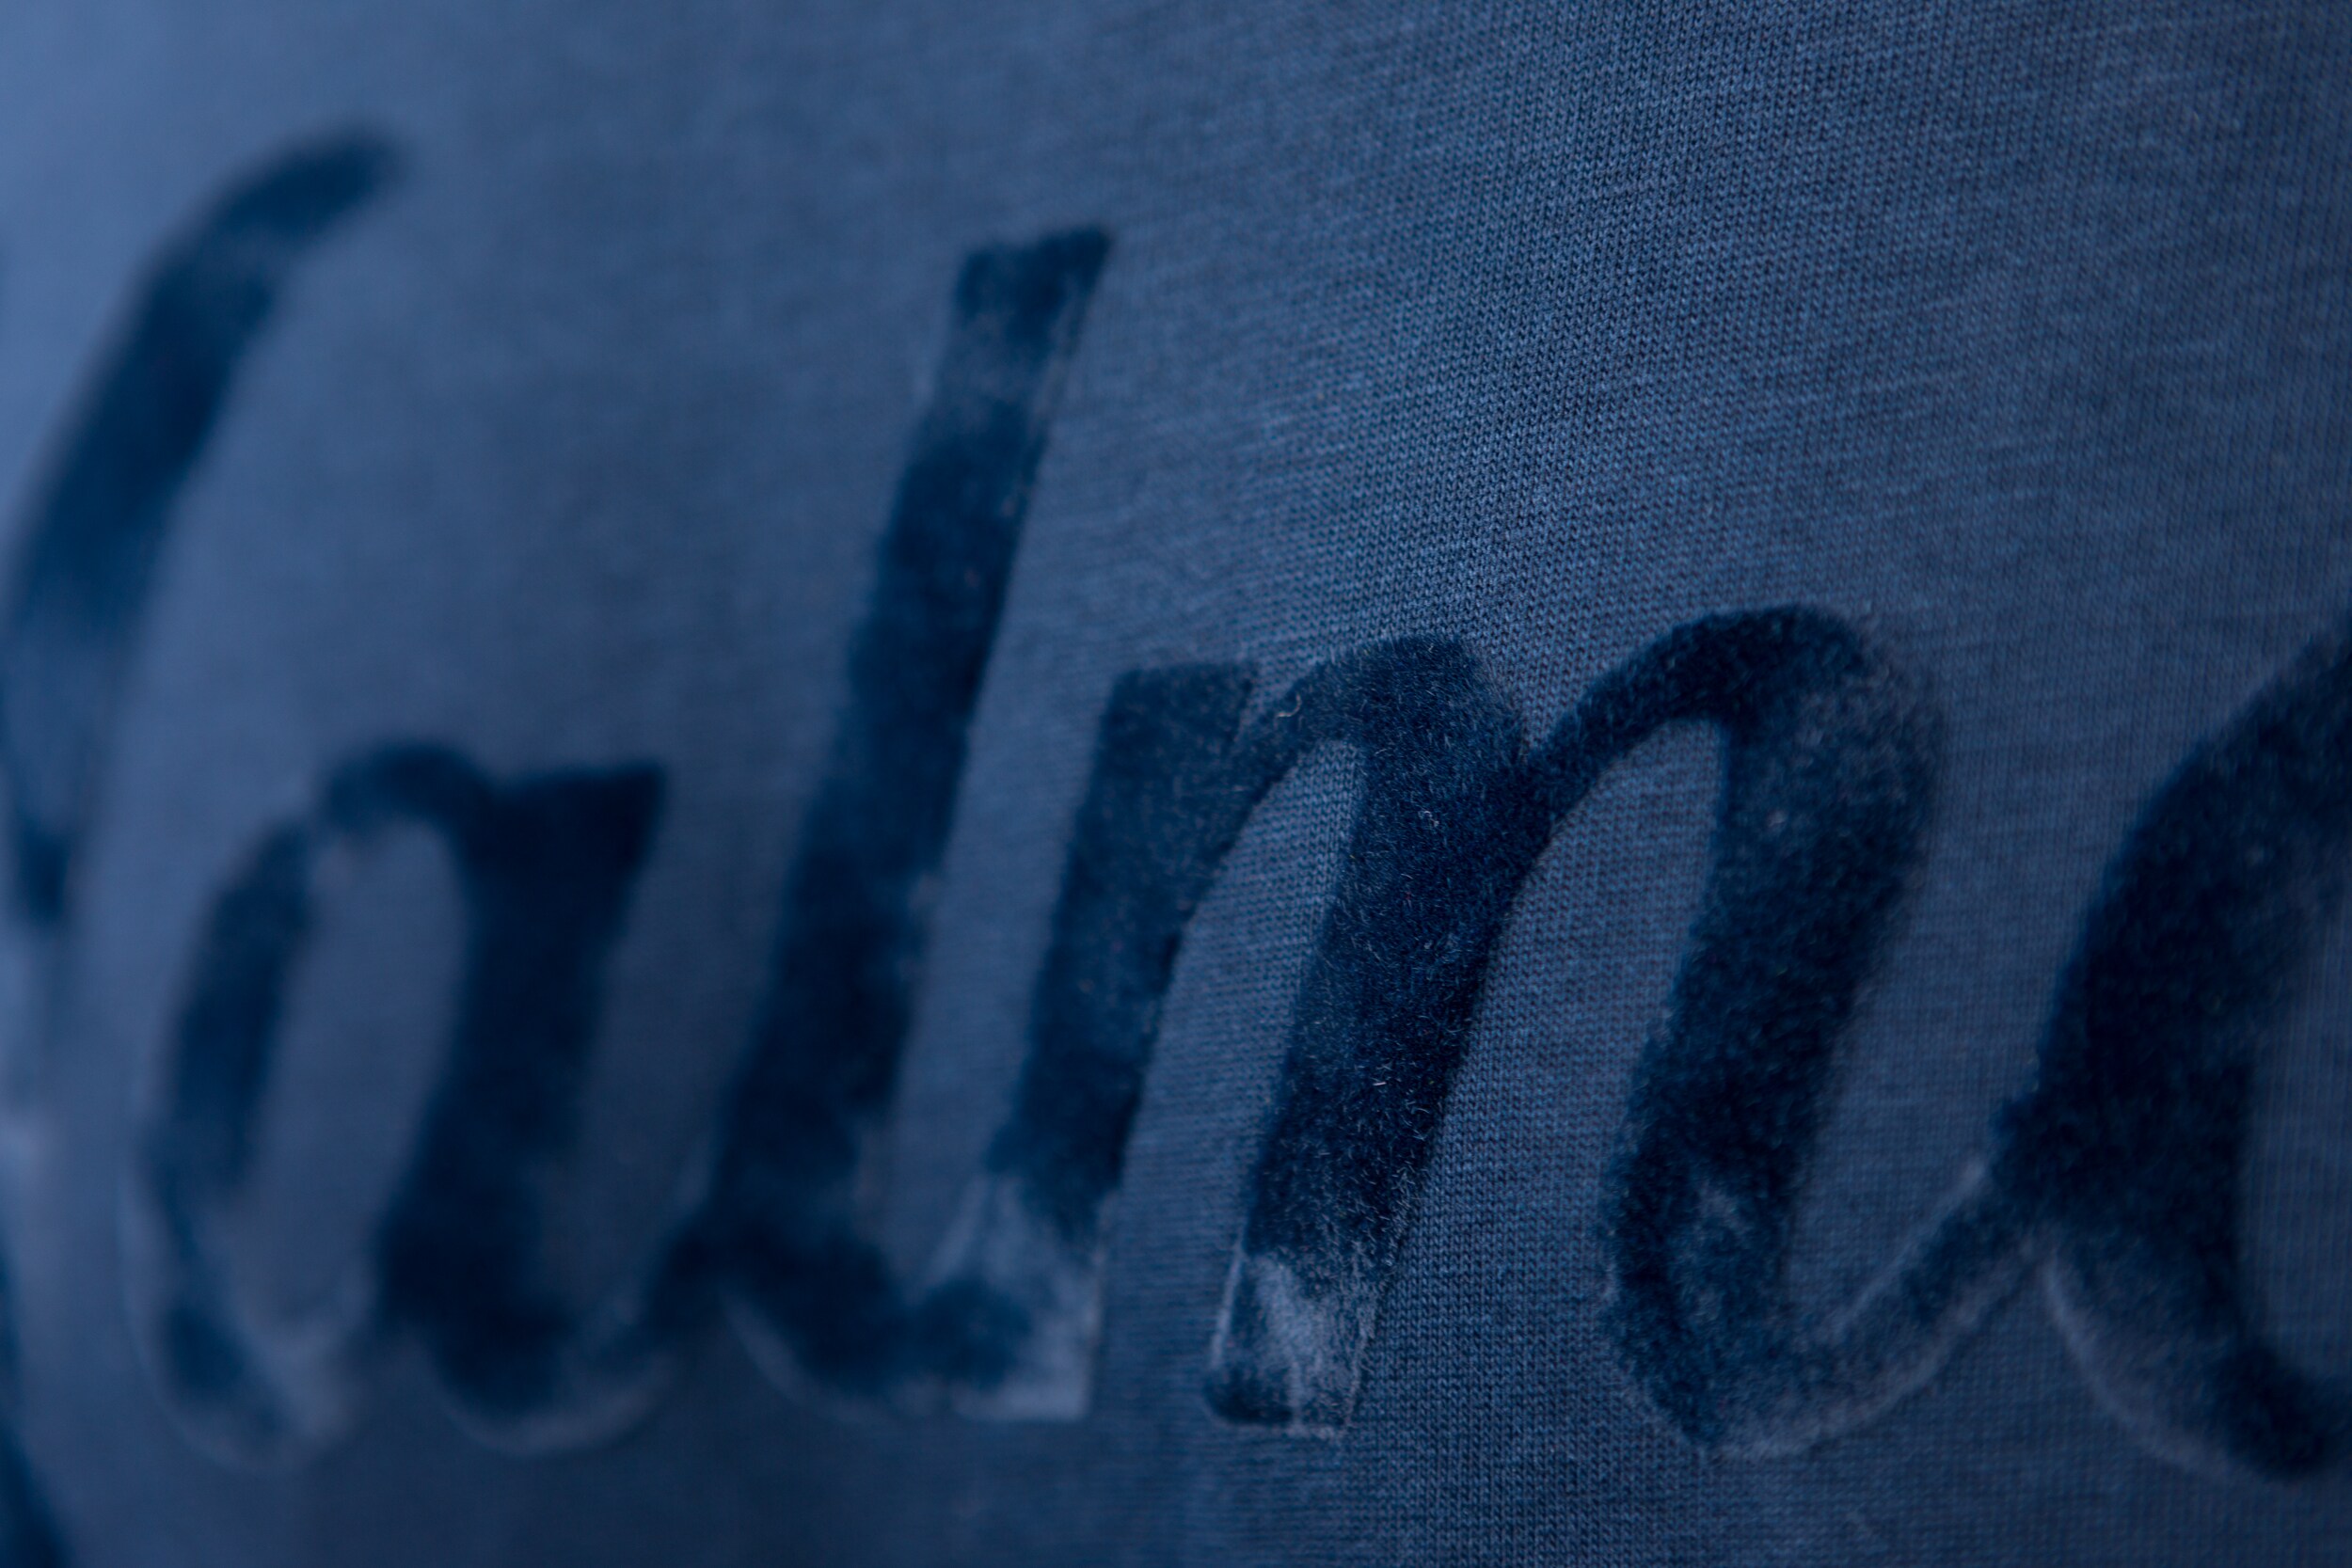 T-shirt marin Malmö FF flock